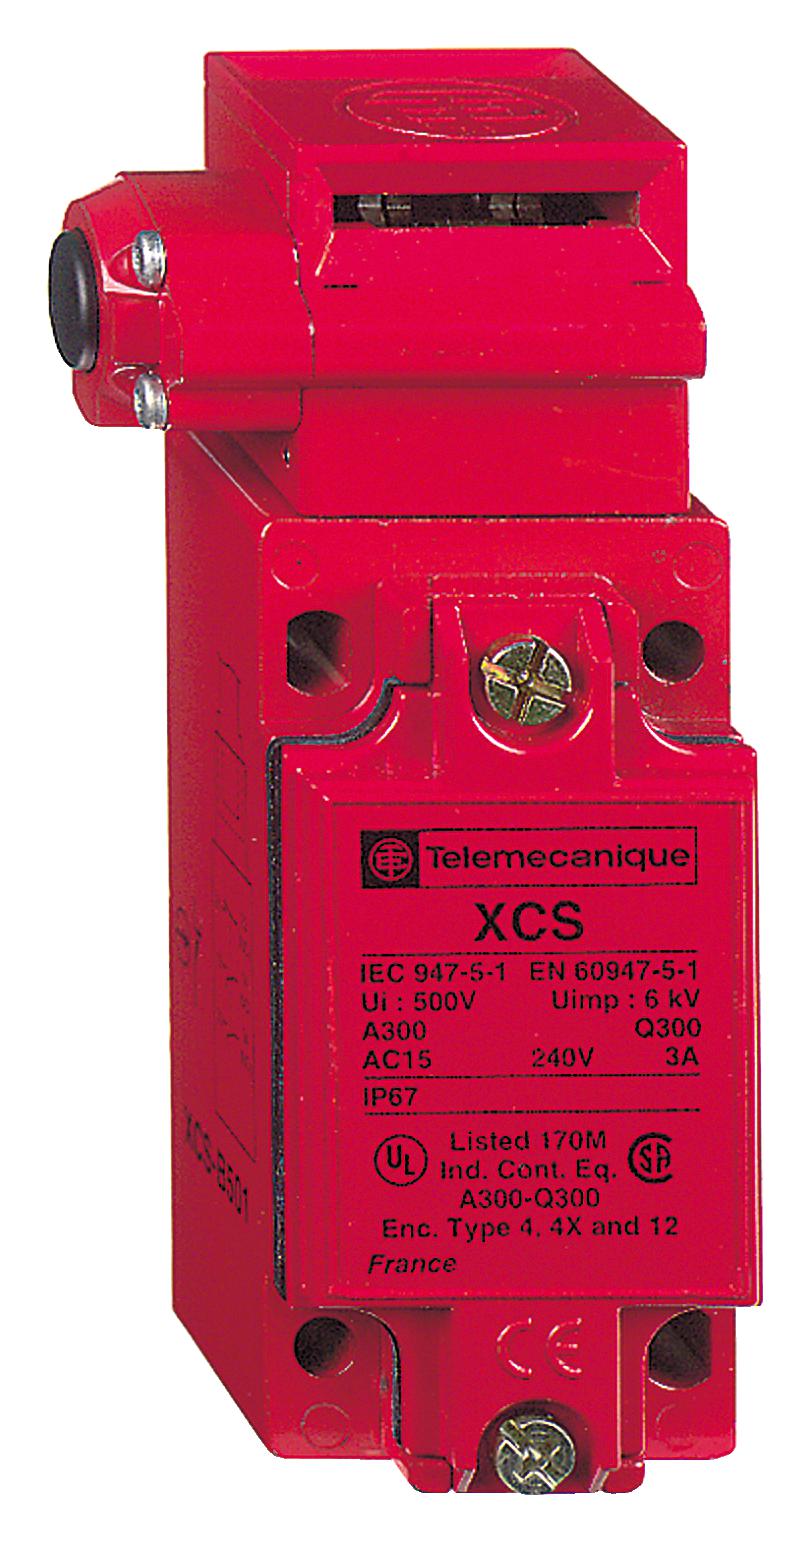 img XCSB713_Telemecanique-Sensors.jpg